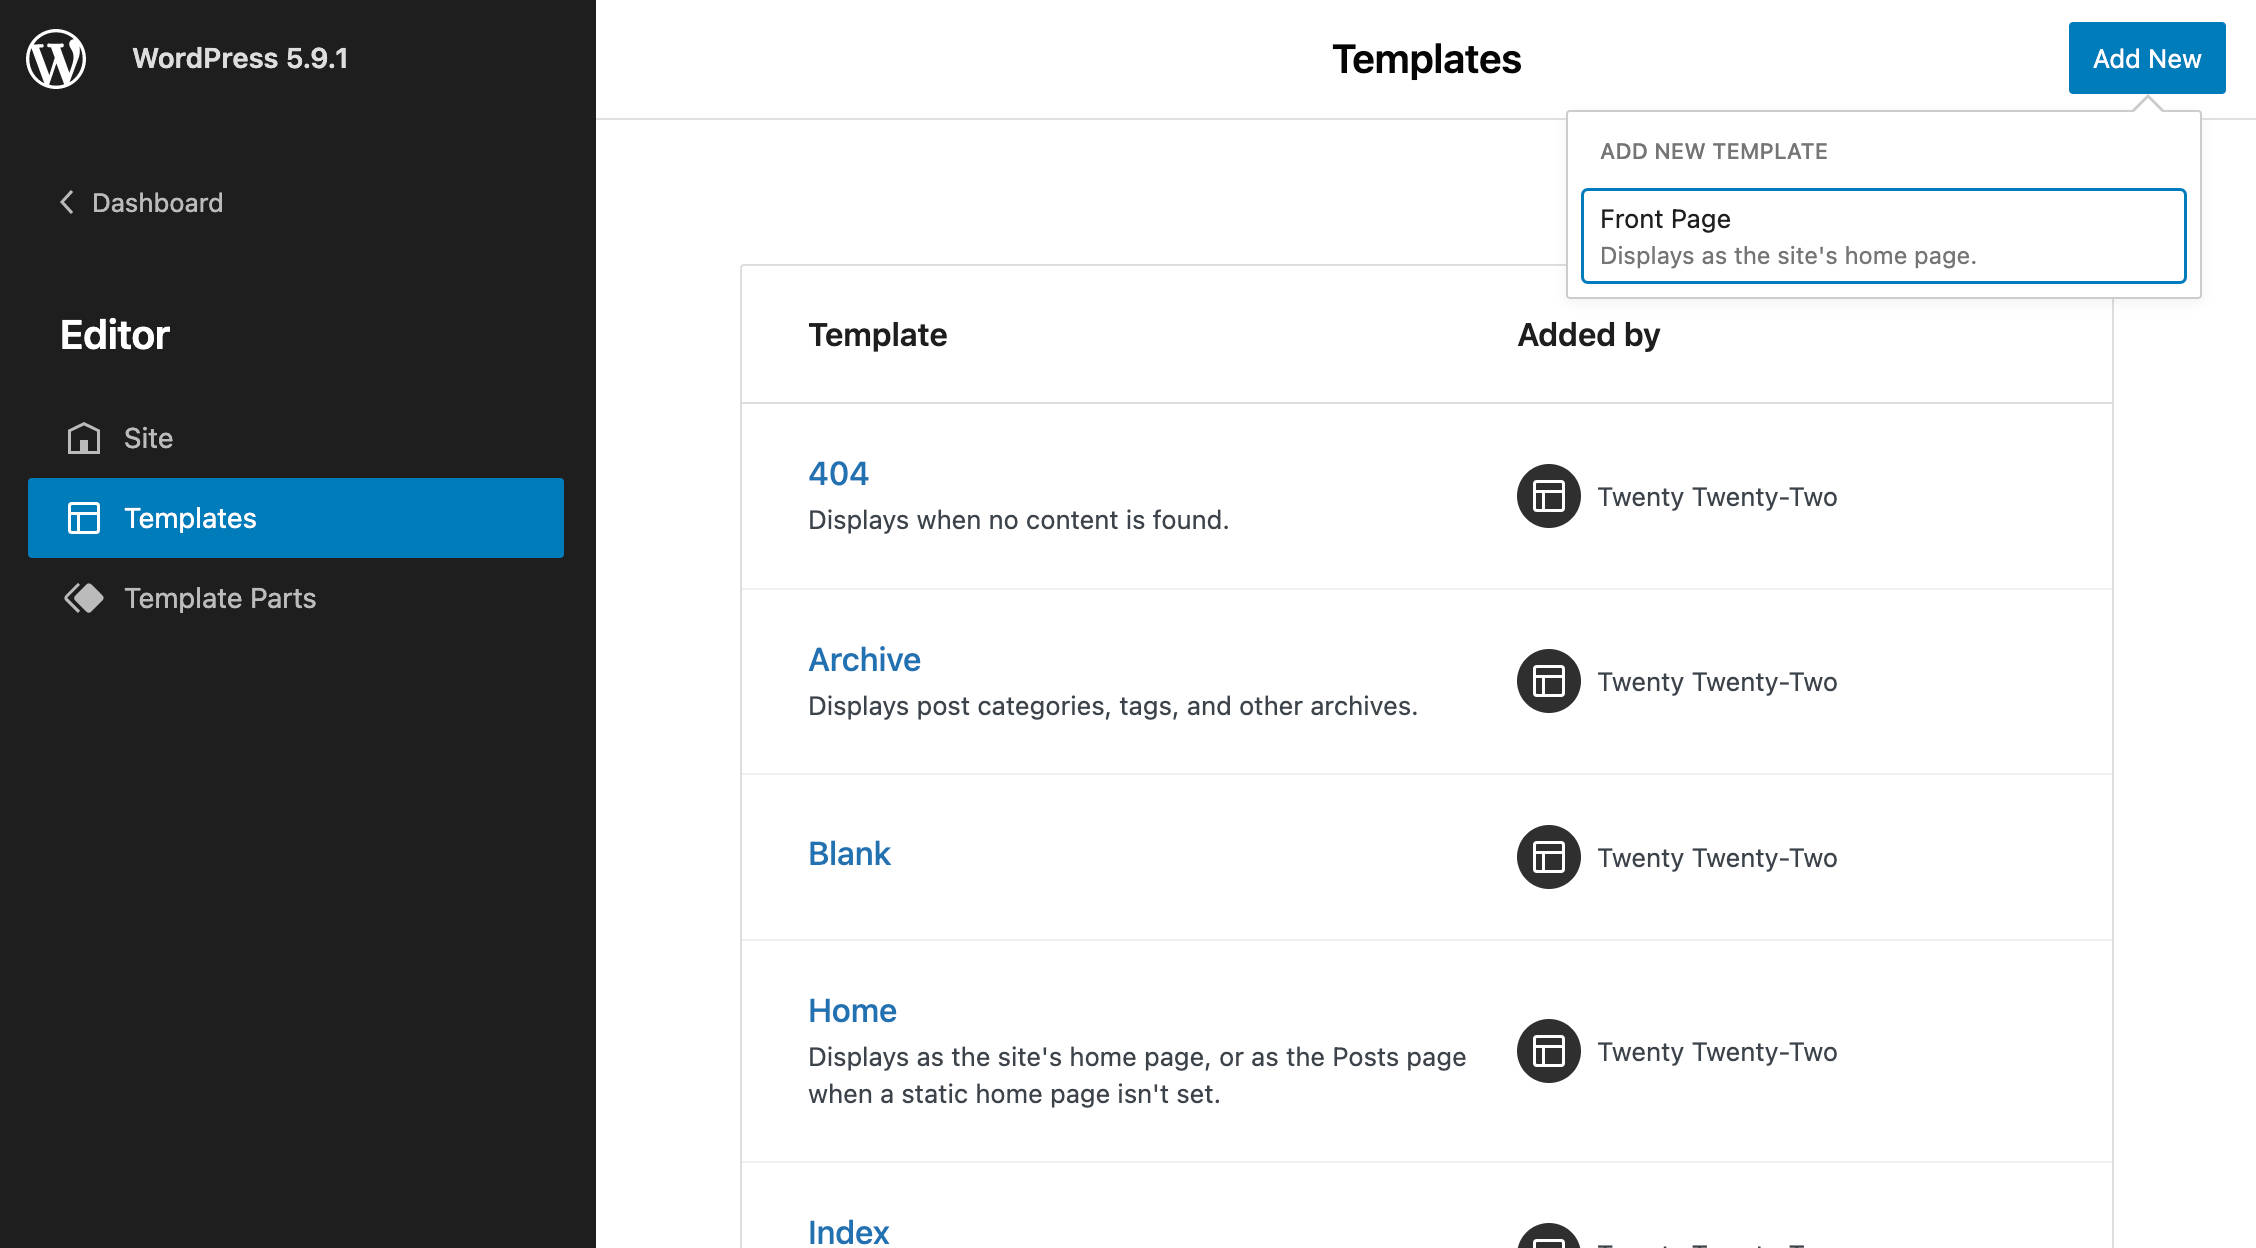 A screenshot showing templates in WordPress 5.9.